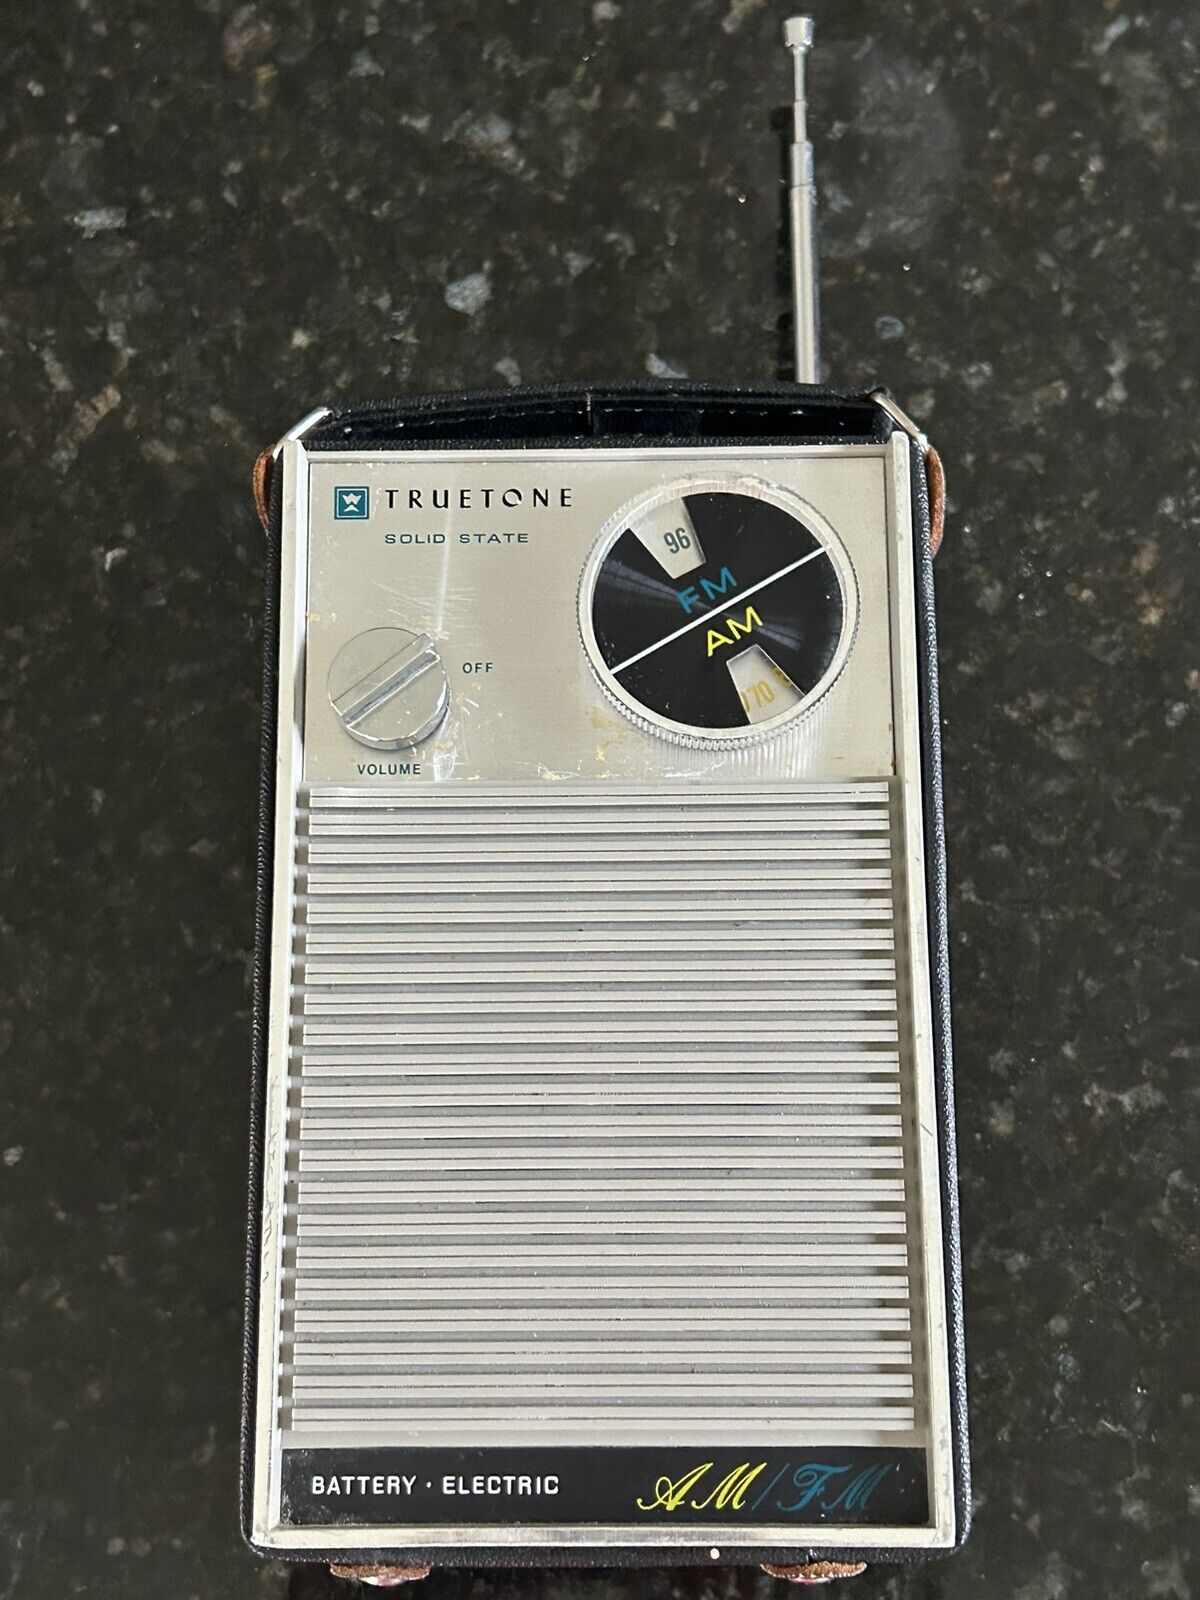 Vintage Truetone Portable Radio Model MIC3016A-07 - Electric/Battery